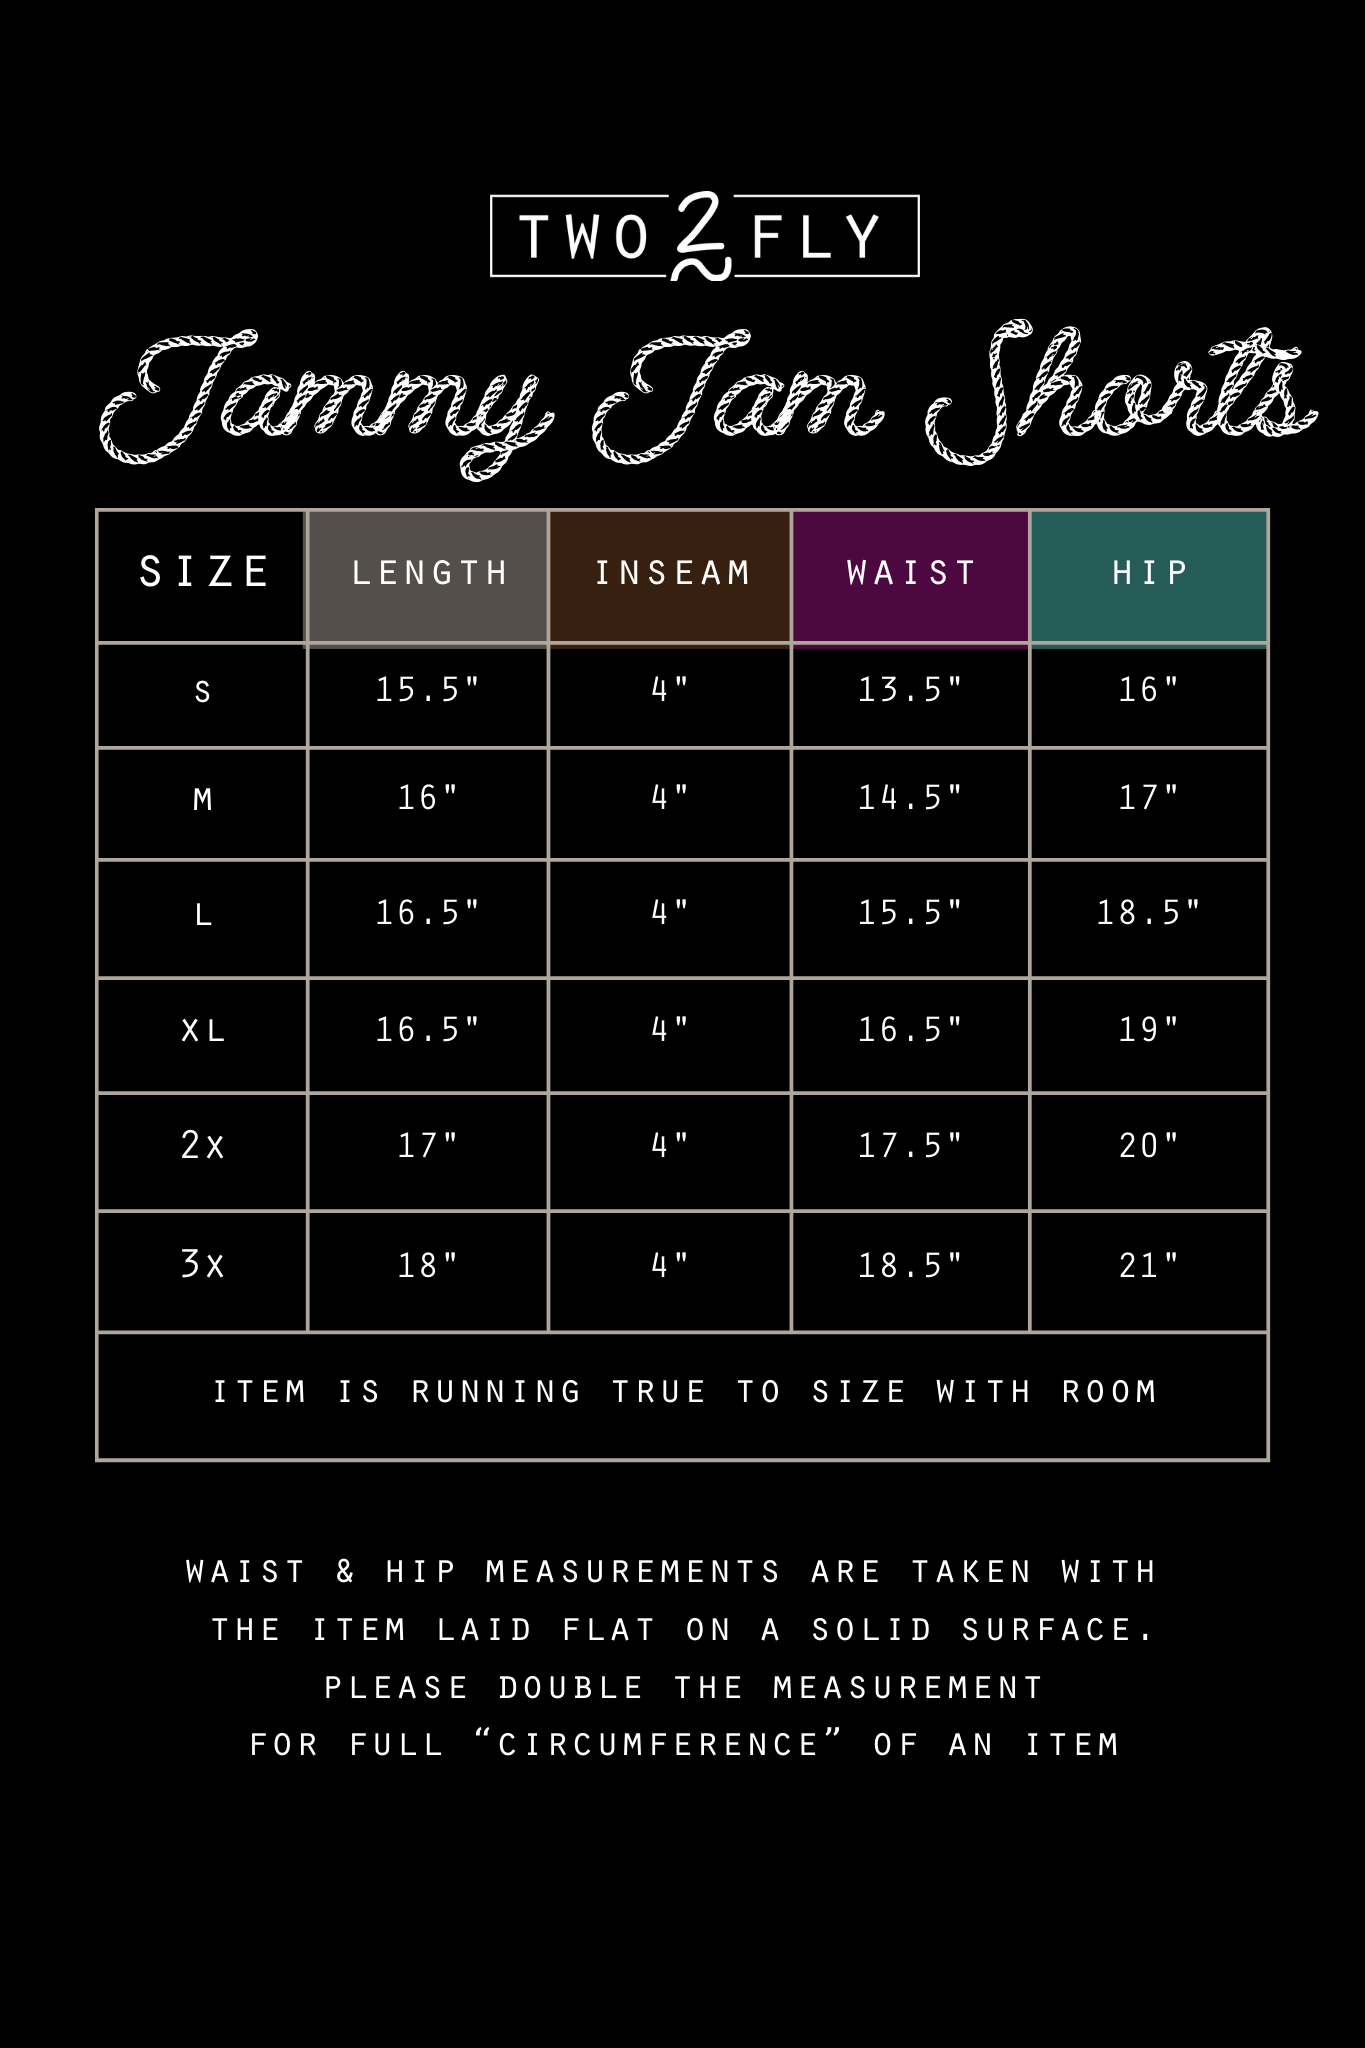 JAMMY JAMS SHORTS * LUX